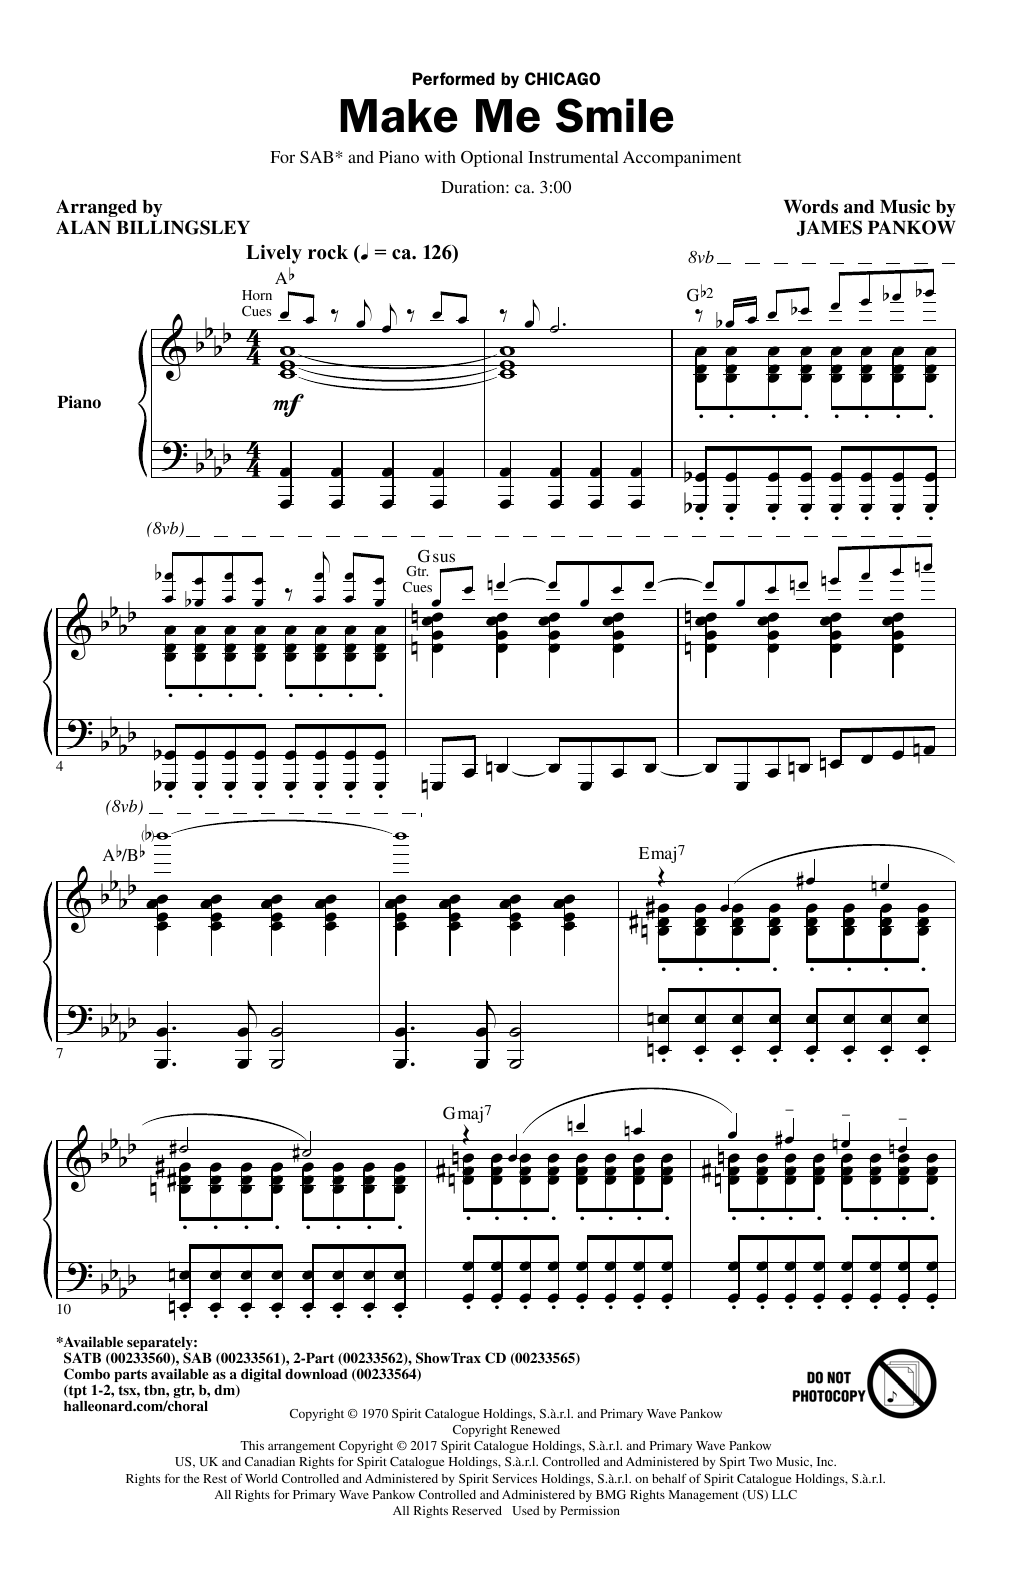 Alan Billingsley Make Me Smile sheet music notes and chords arranged for SATB Choir